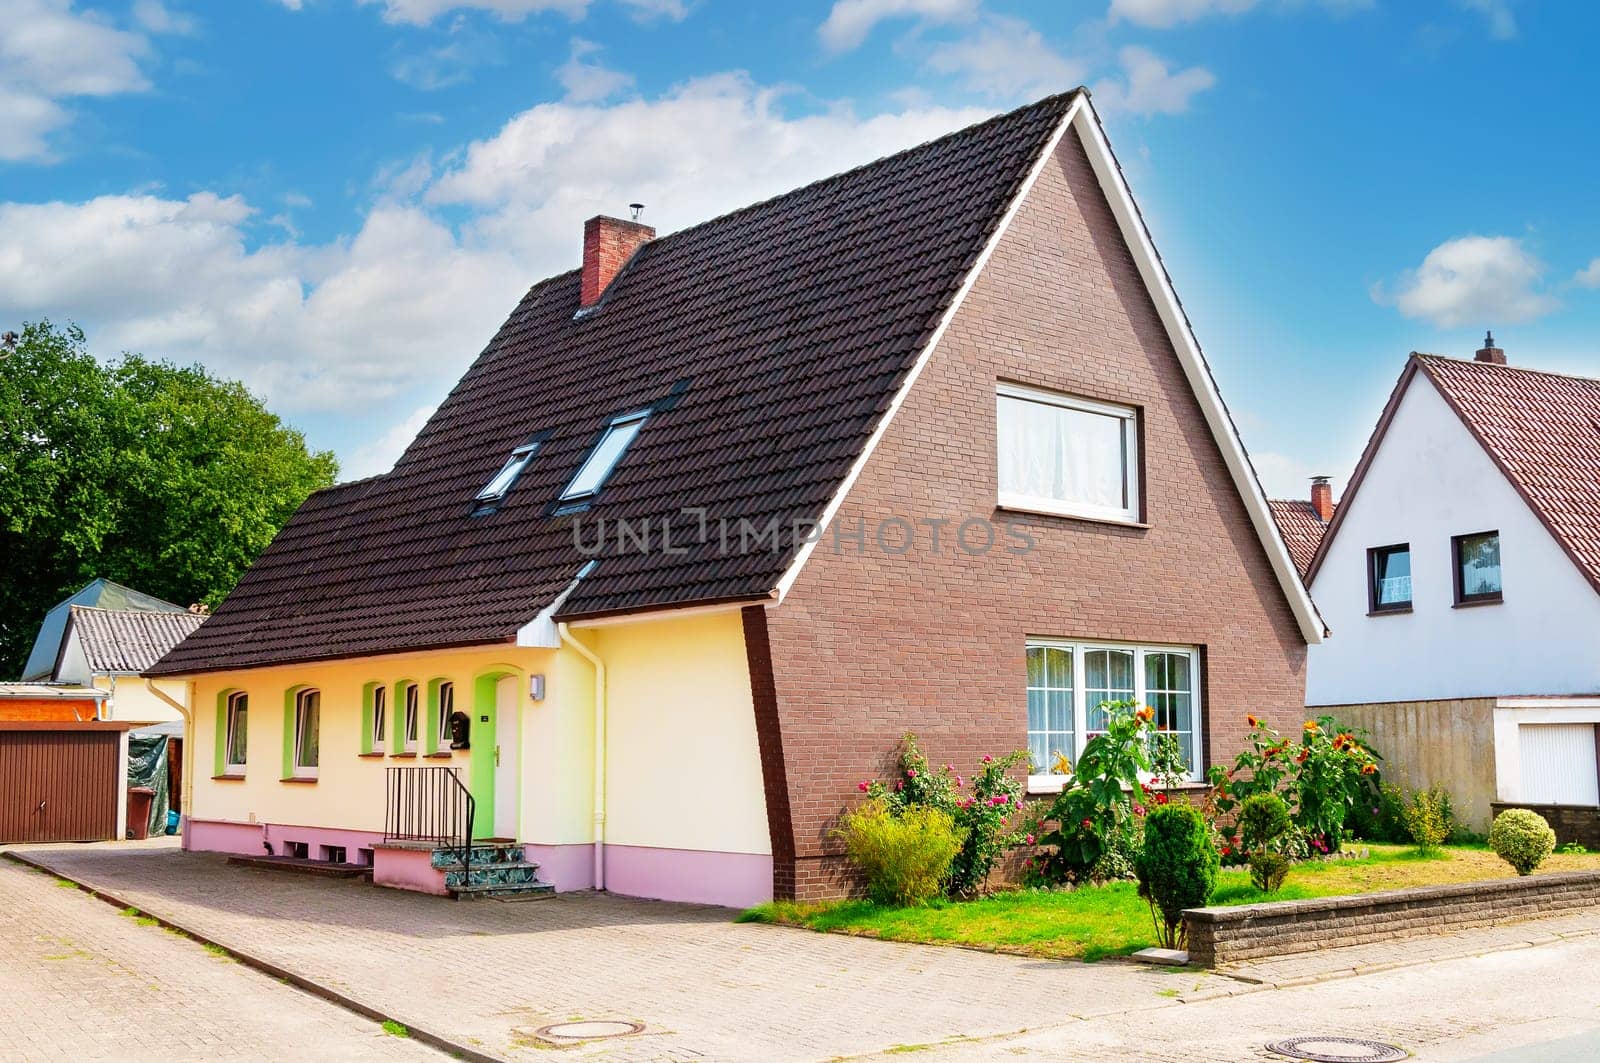 Cozy german house. Street in Germany by NataliPopova